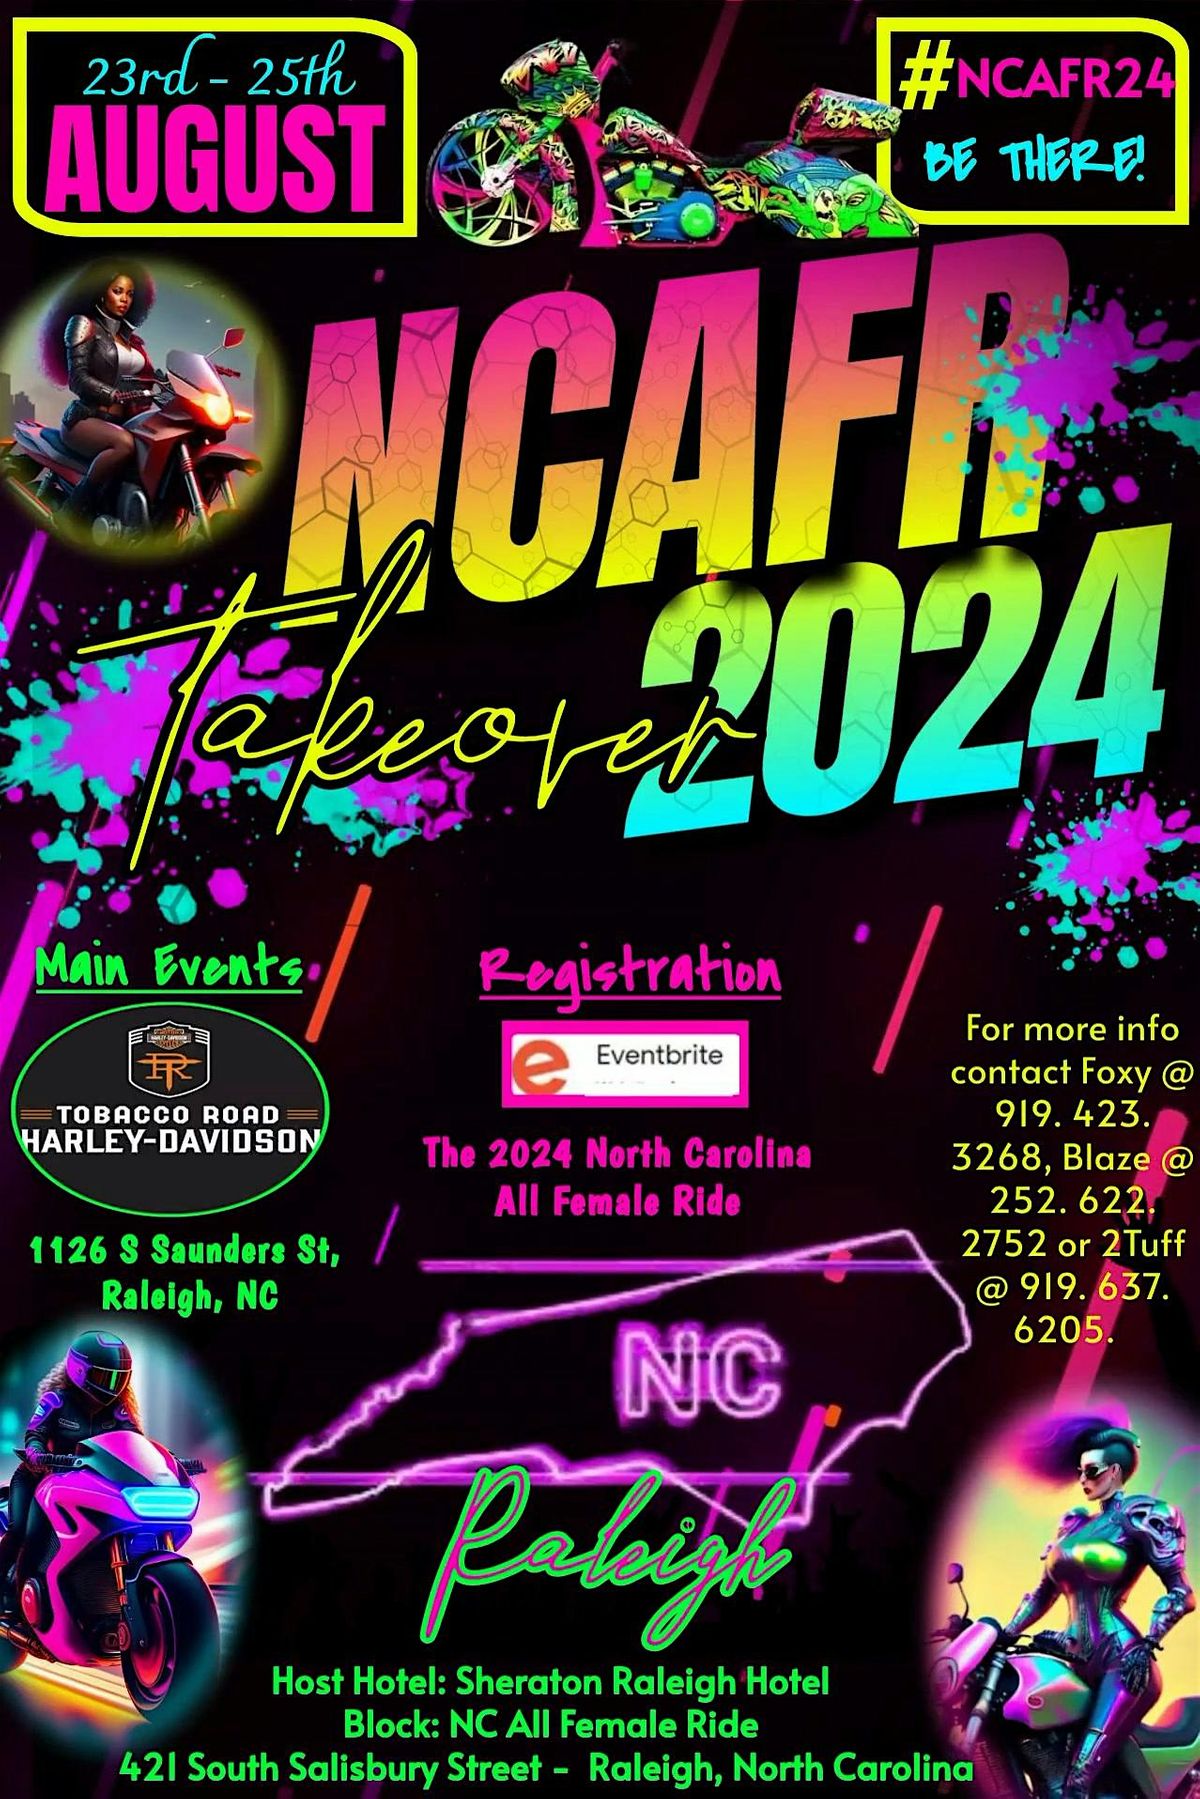 The 2024 North Carolina All Female Ride (Aug 23rd - Aug 25th)